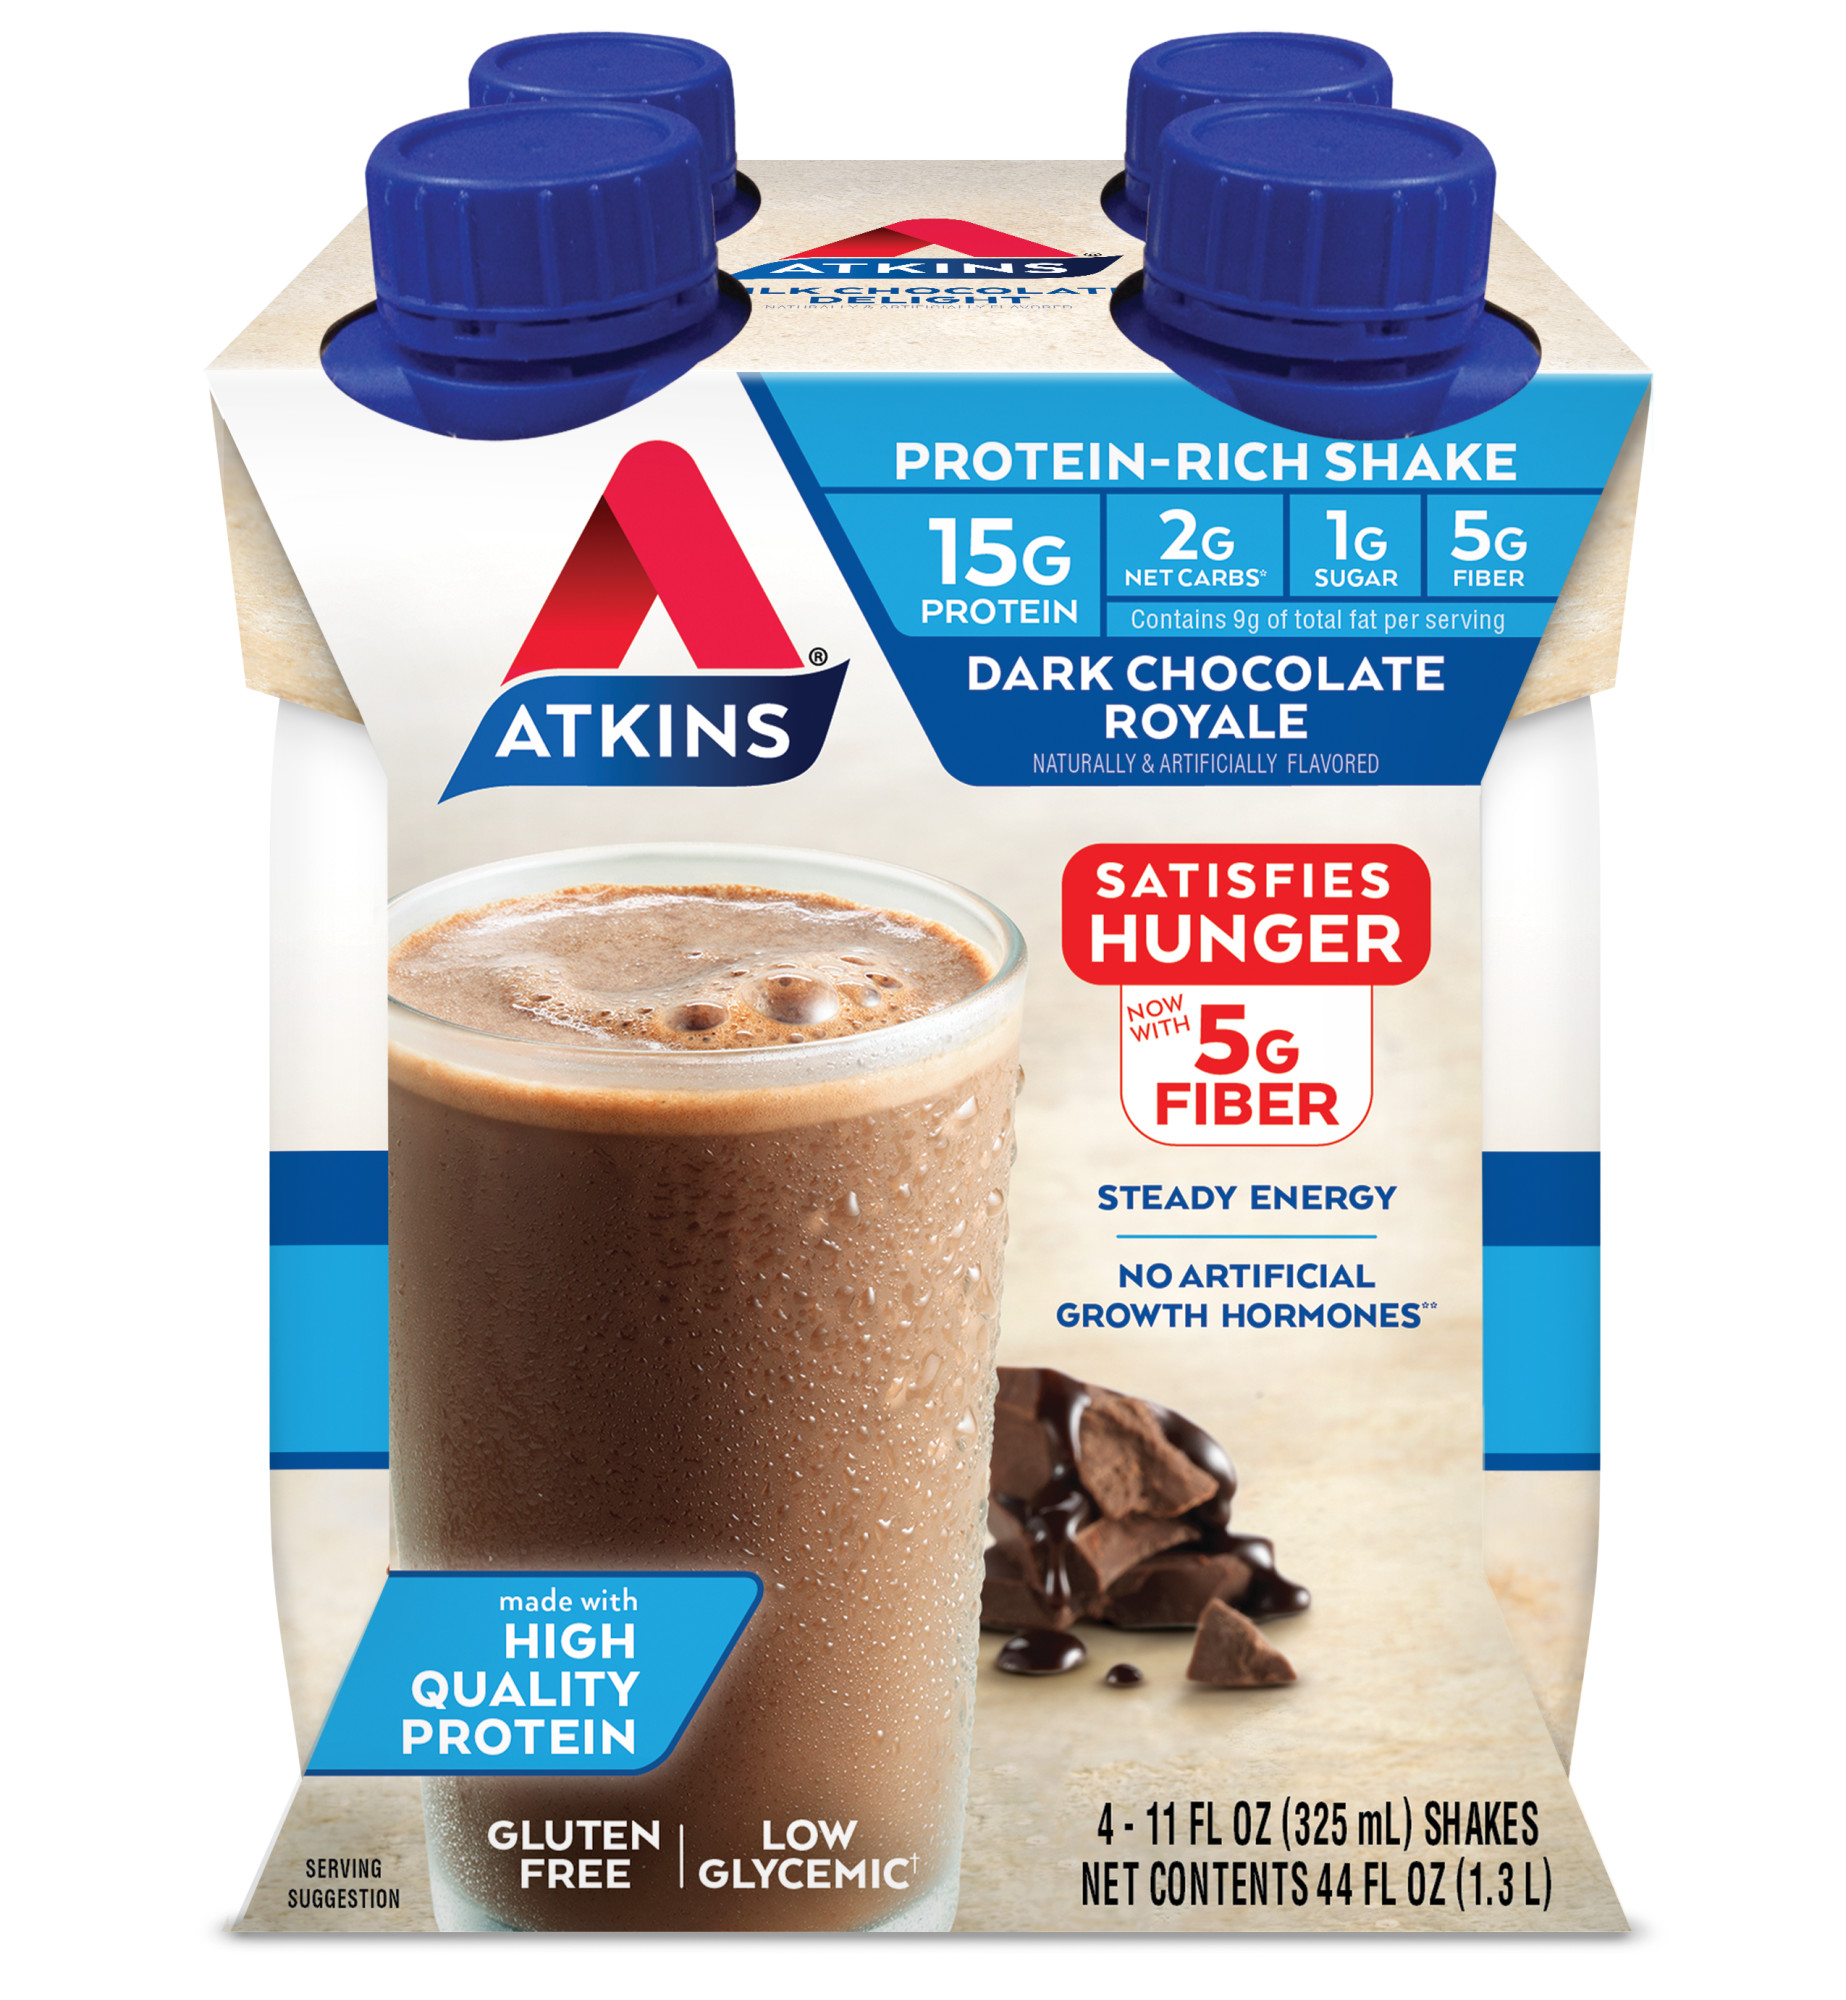 Atkins Dark Chocolate Royale Protein Shake, High Protein, Low Carb, Keto Friendly, Gluten Free, 11fl oz, 4 Ct - image 1 of 9